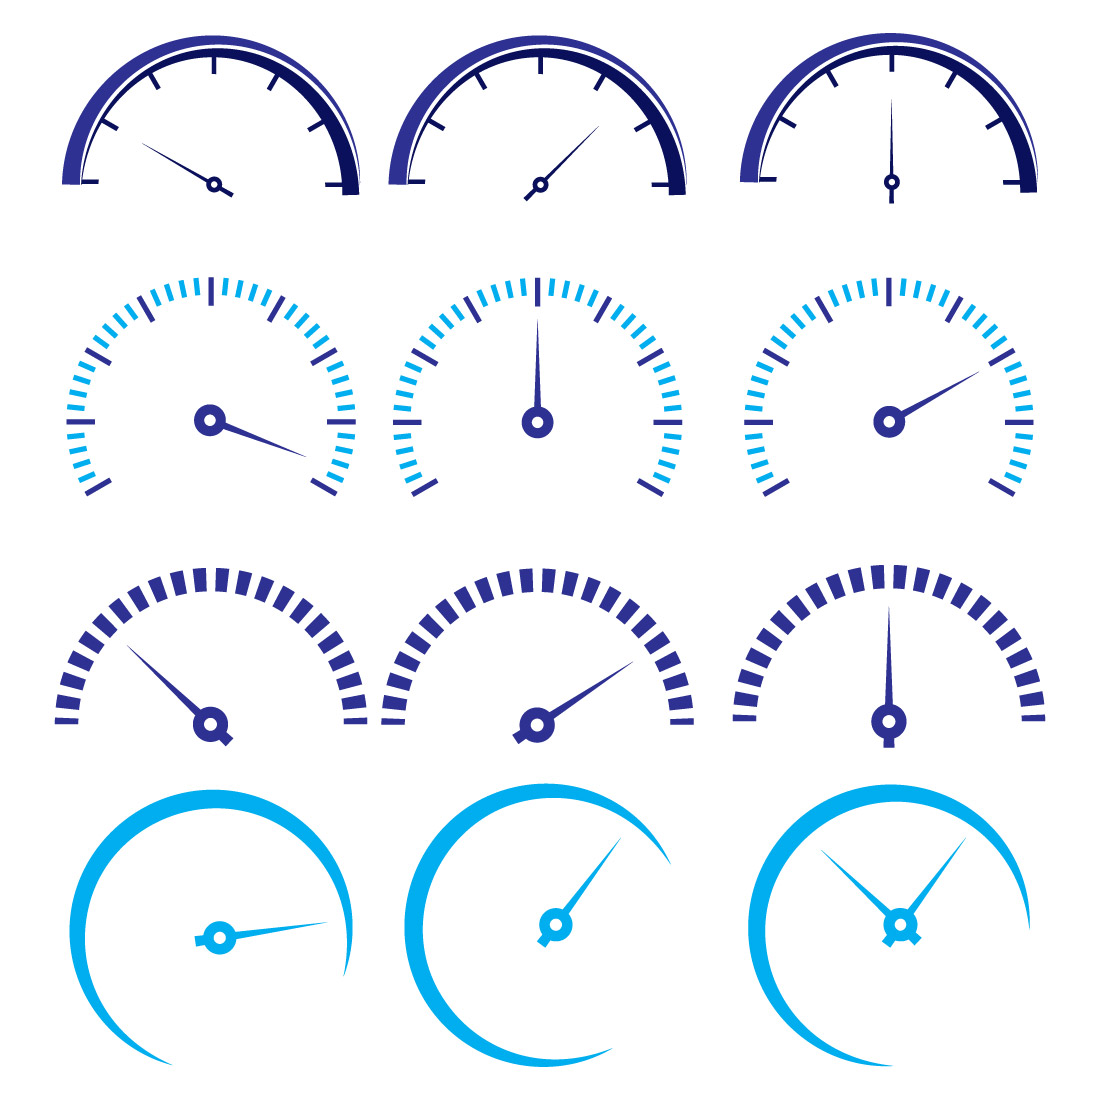 Vecteur Stock speed up logo design, rpm icon vector